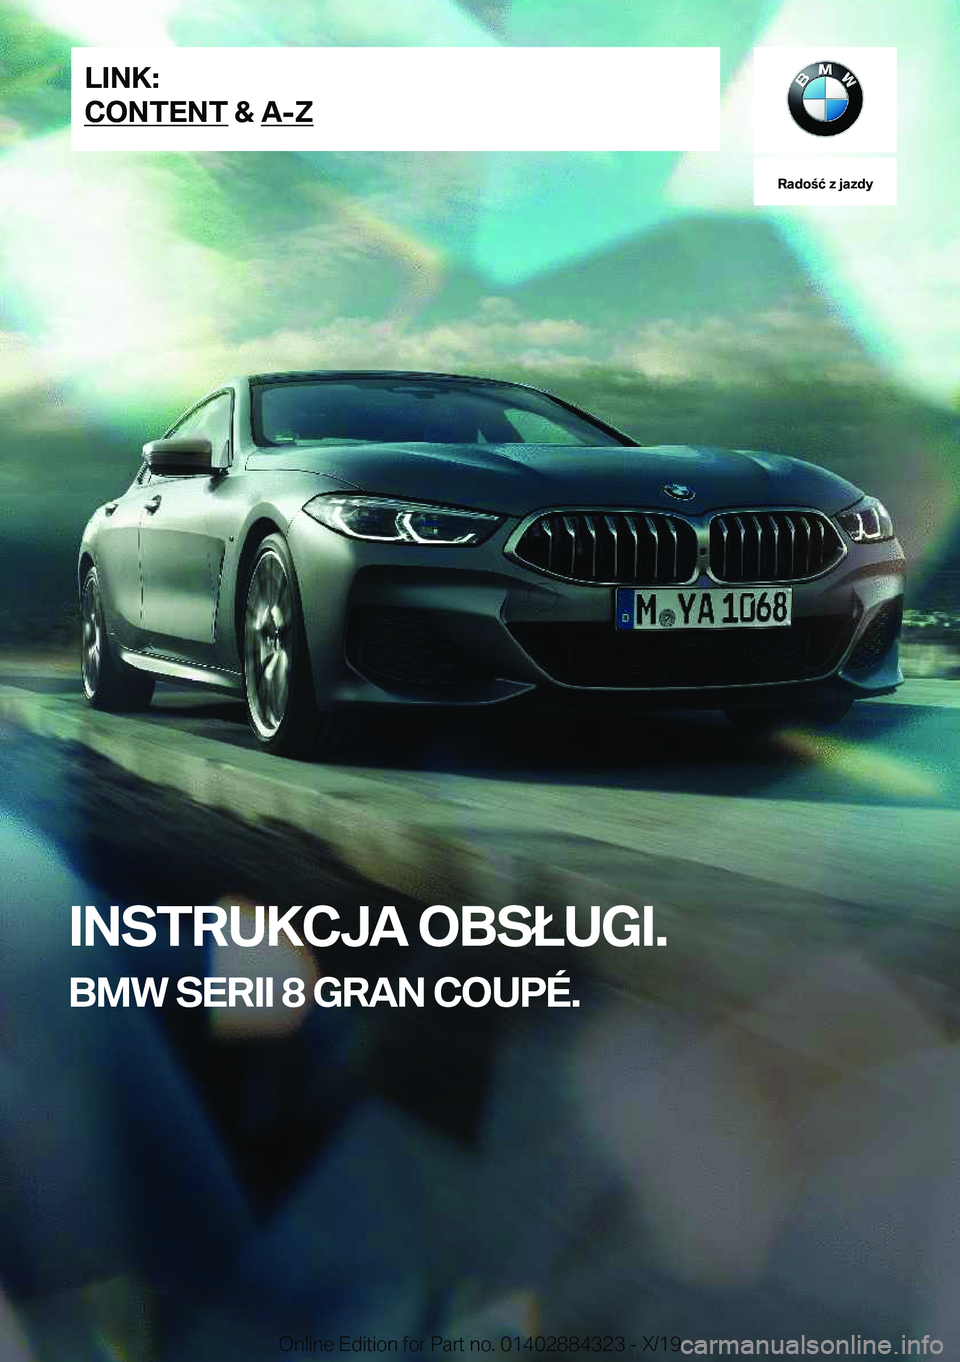 BMW 8 SERIES GRAN COUPE 2020  Instrukcja obsługi (in Polish) �R�a�d�o�ć��z��j�a�z�d�y
�I�N�S�T�R�U�K�C�J�A��O�B�S�Ł�U�G�I�.
�B�M�W��S�E�R�I�I��8��G�R�A�N��C�O�U�P�